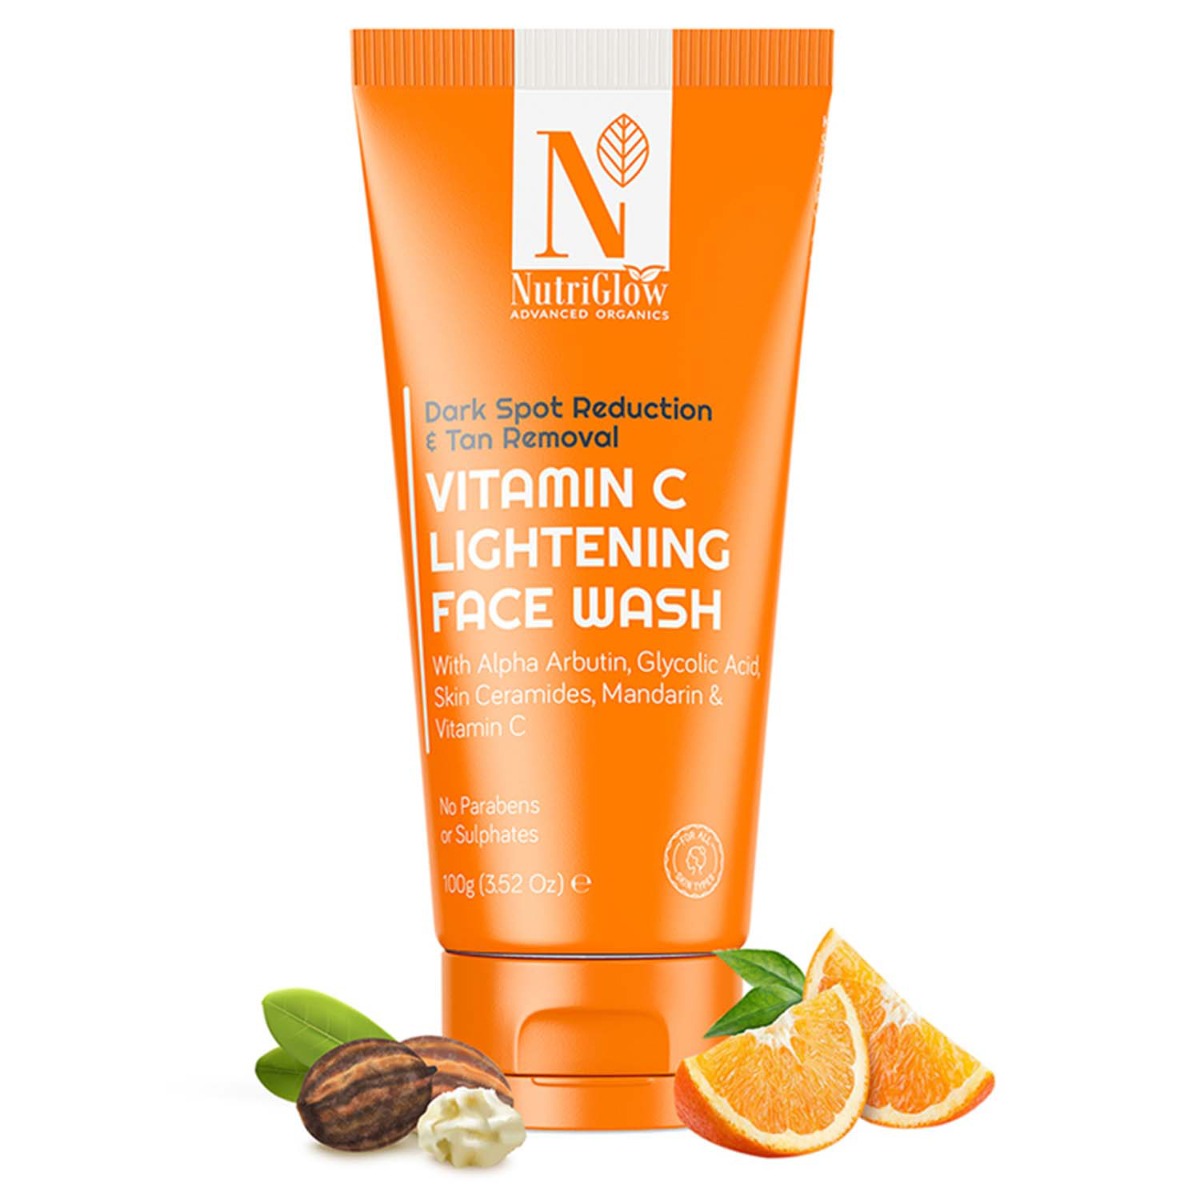 NutriGlow Advanced Organics Vitamin C Lightening Face Wash, 100gm